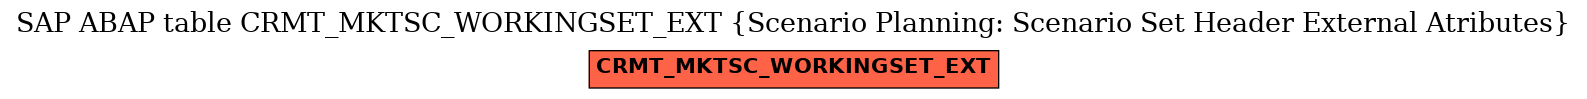 E-R Diagram for table CRMT_MKTSC_WORKINGSET_EXT (Scenario Planning: Scenario Set Header External Atributes)